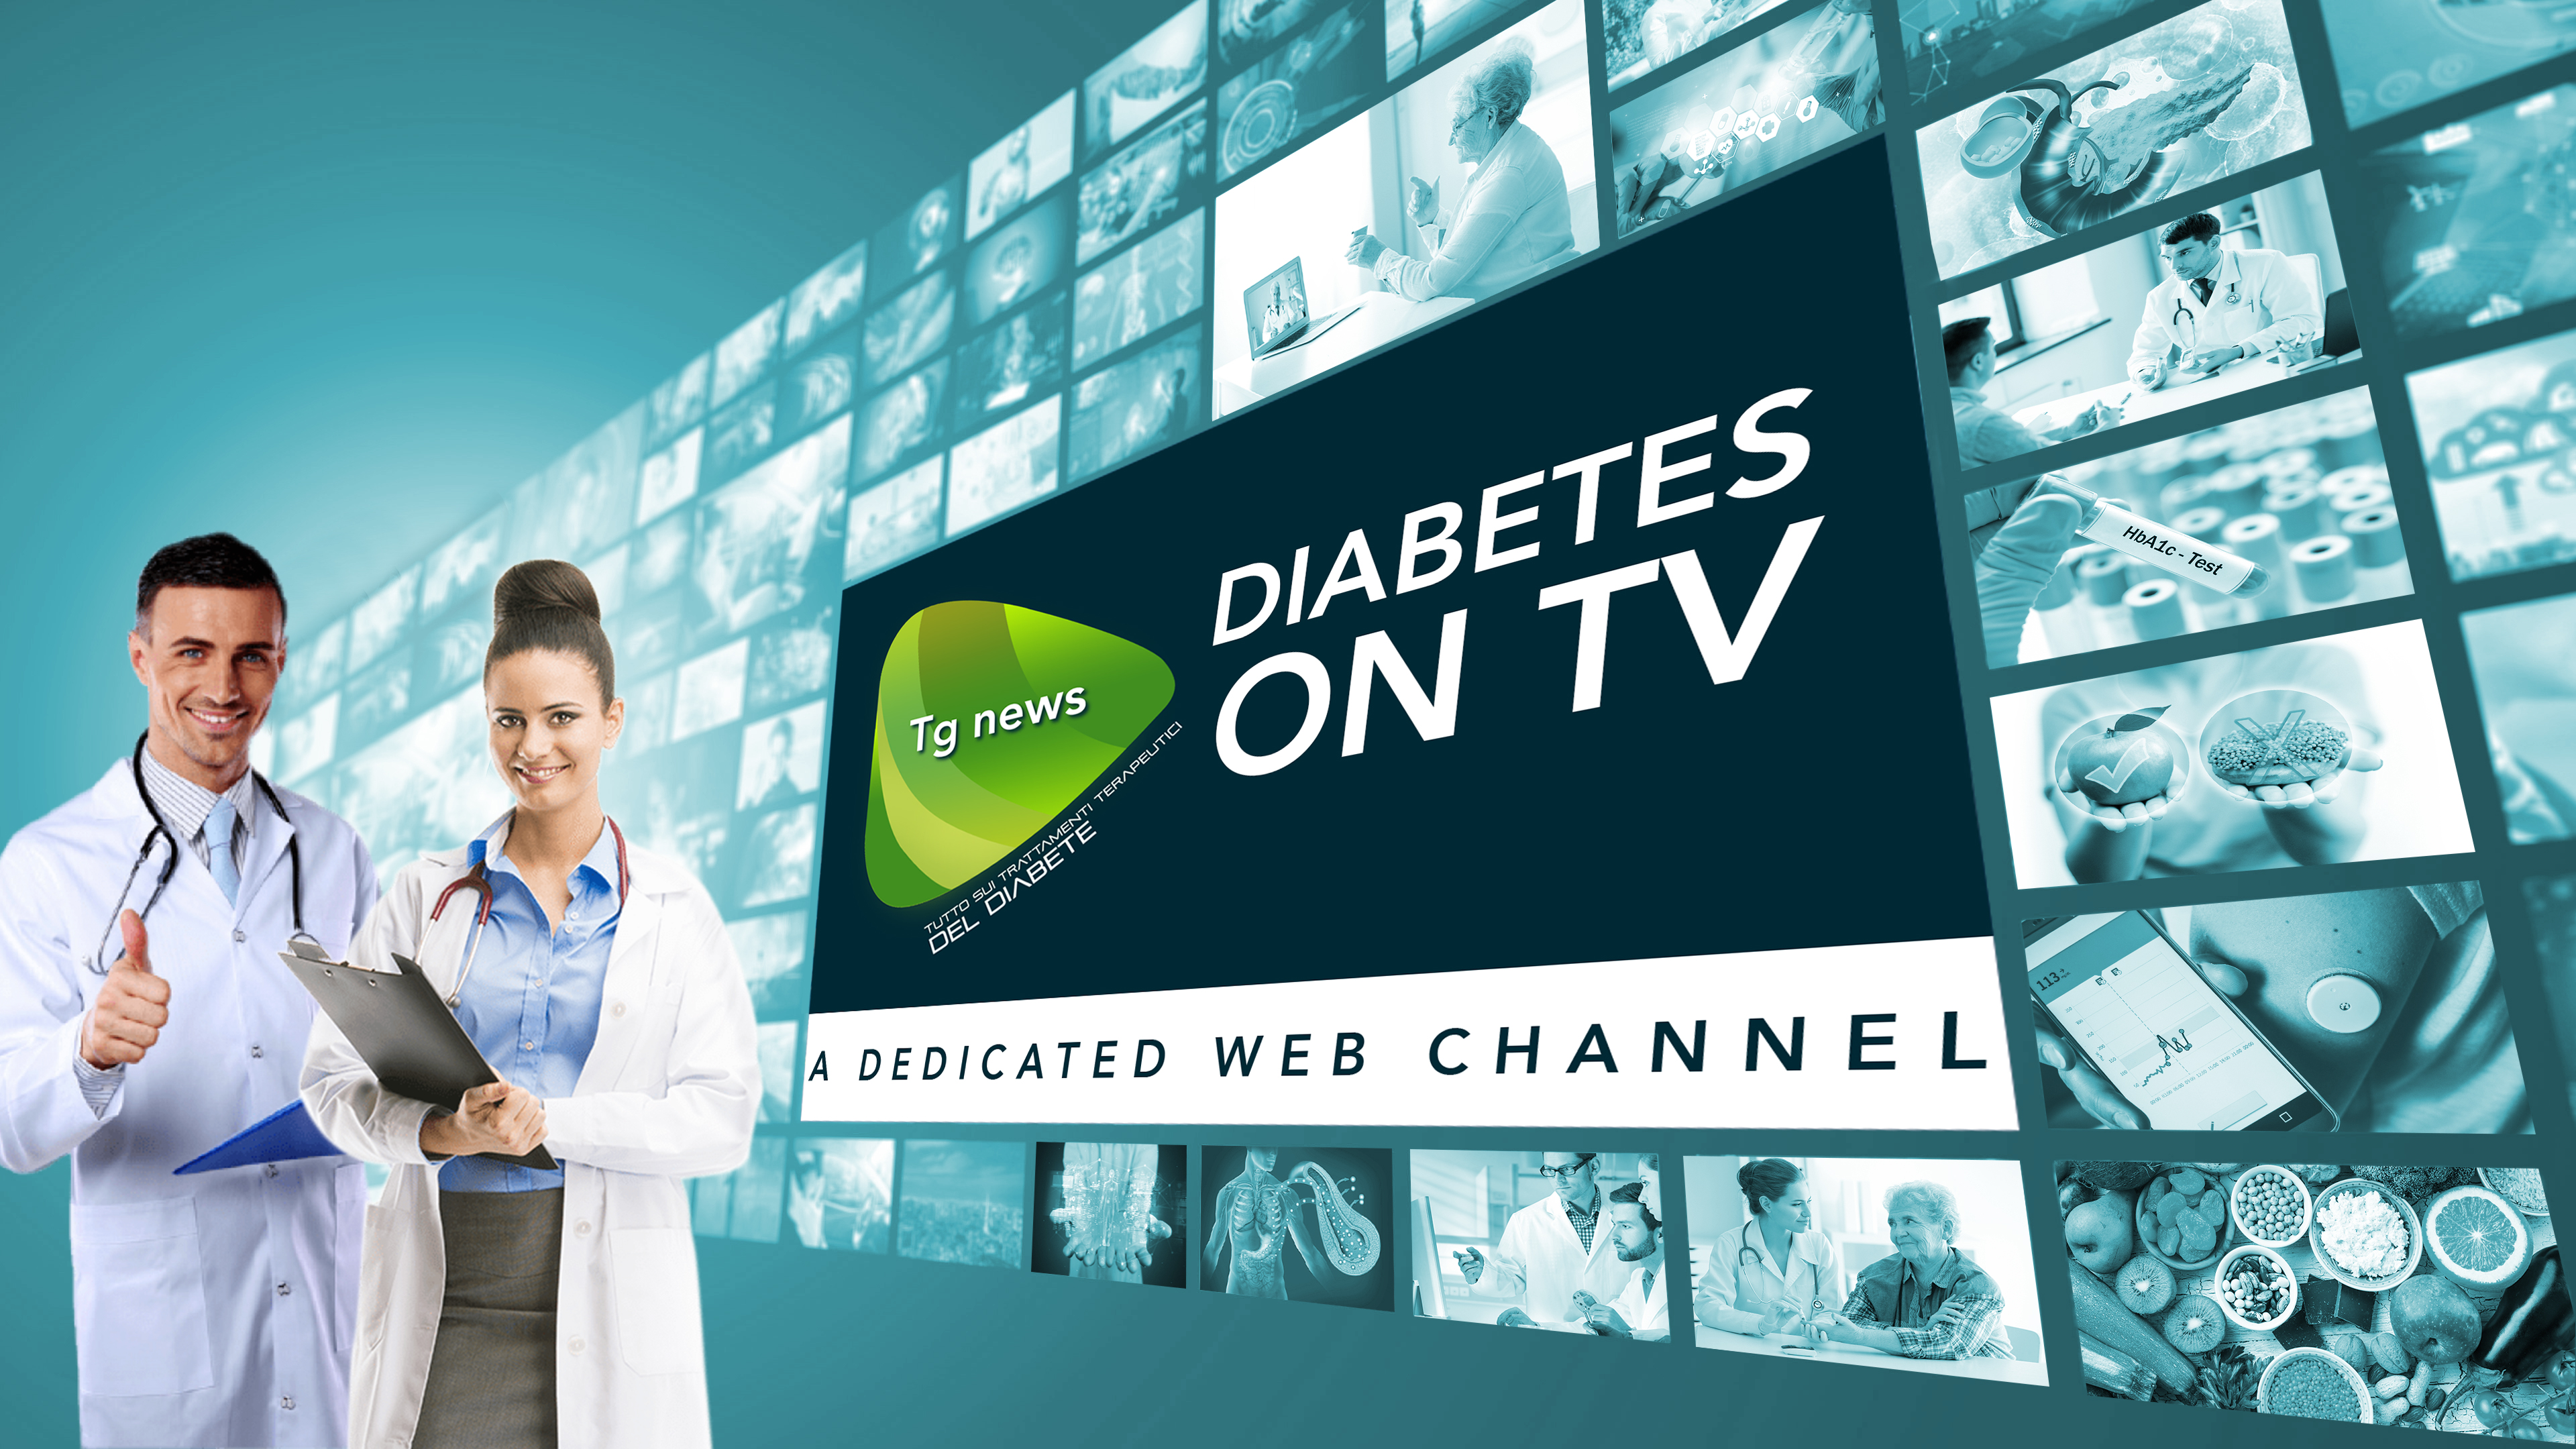 DiabetesOnTV 17Novembre2021